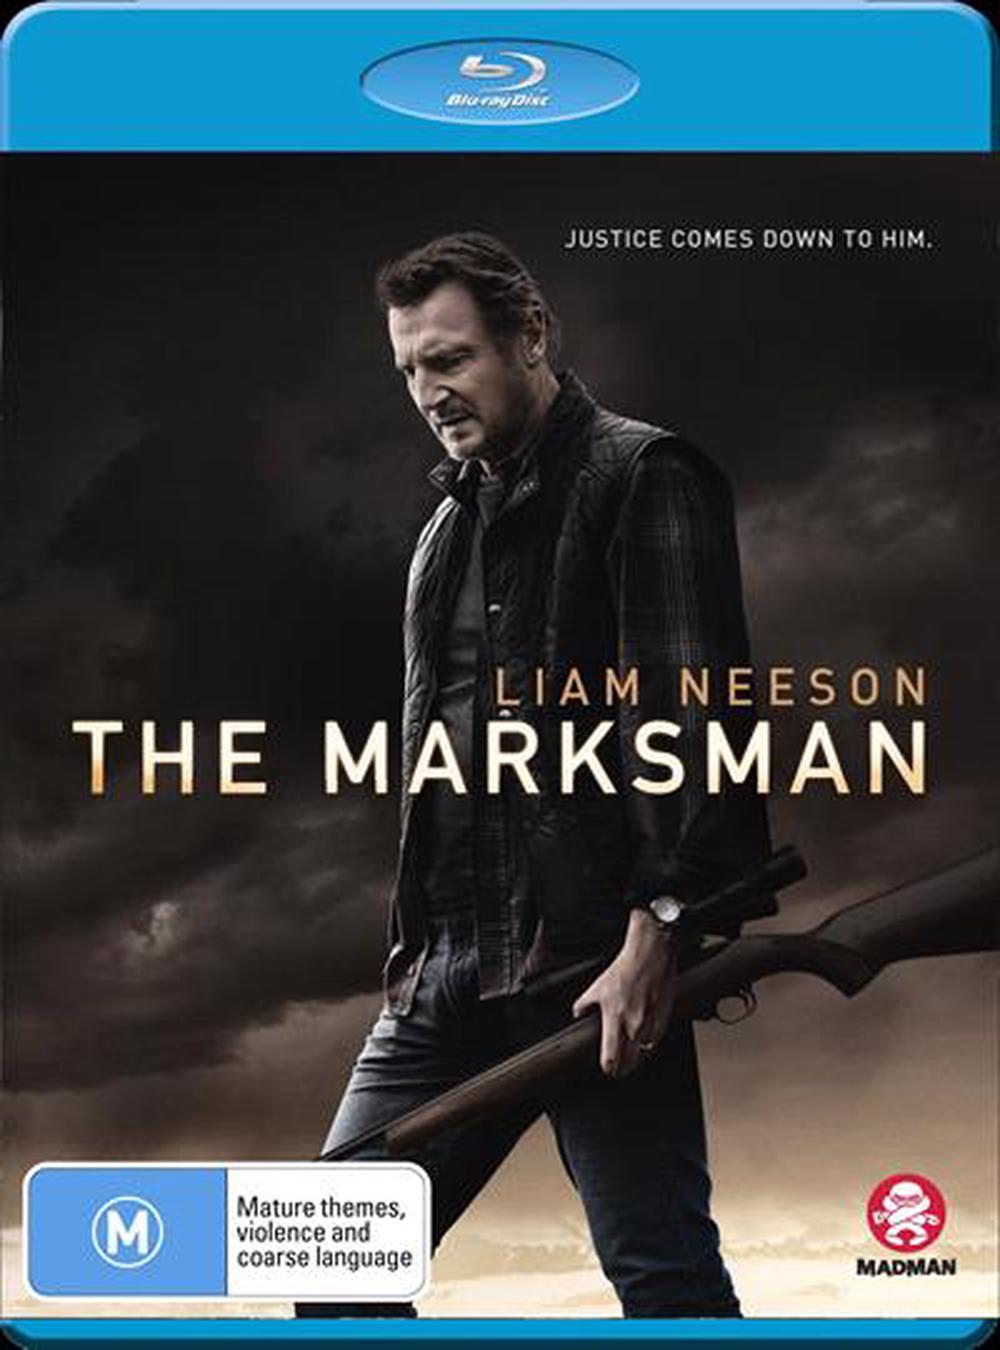 The marksman